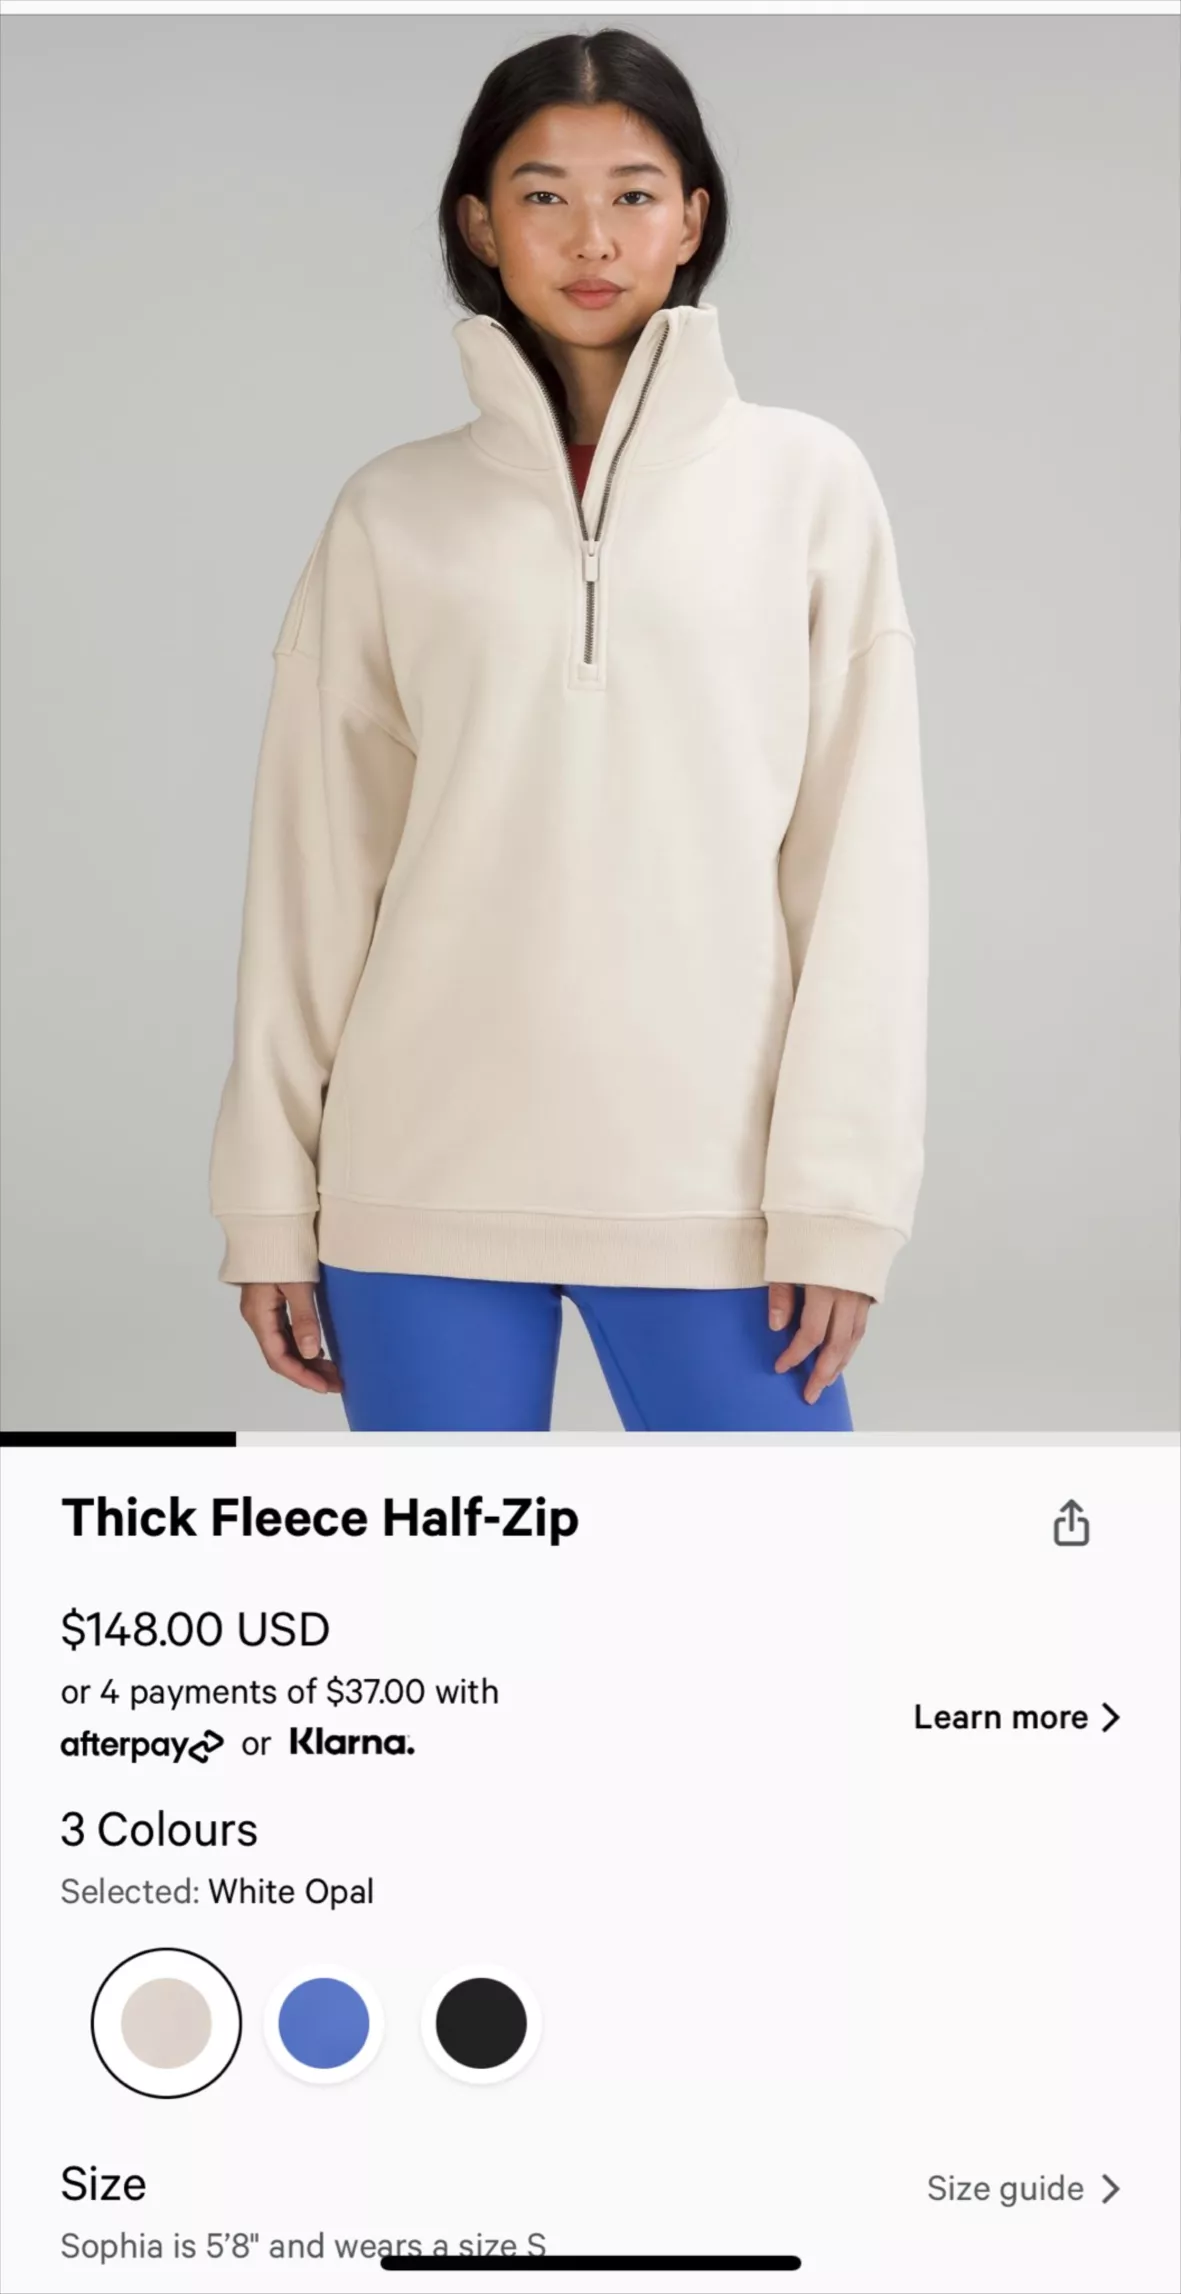 Thick Fleece Half-Zip curated on LTK